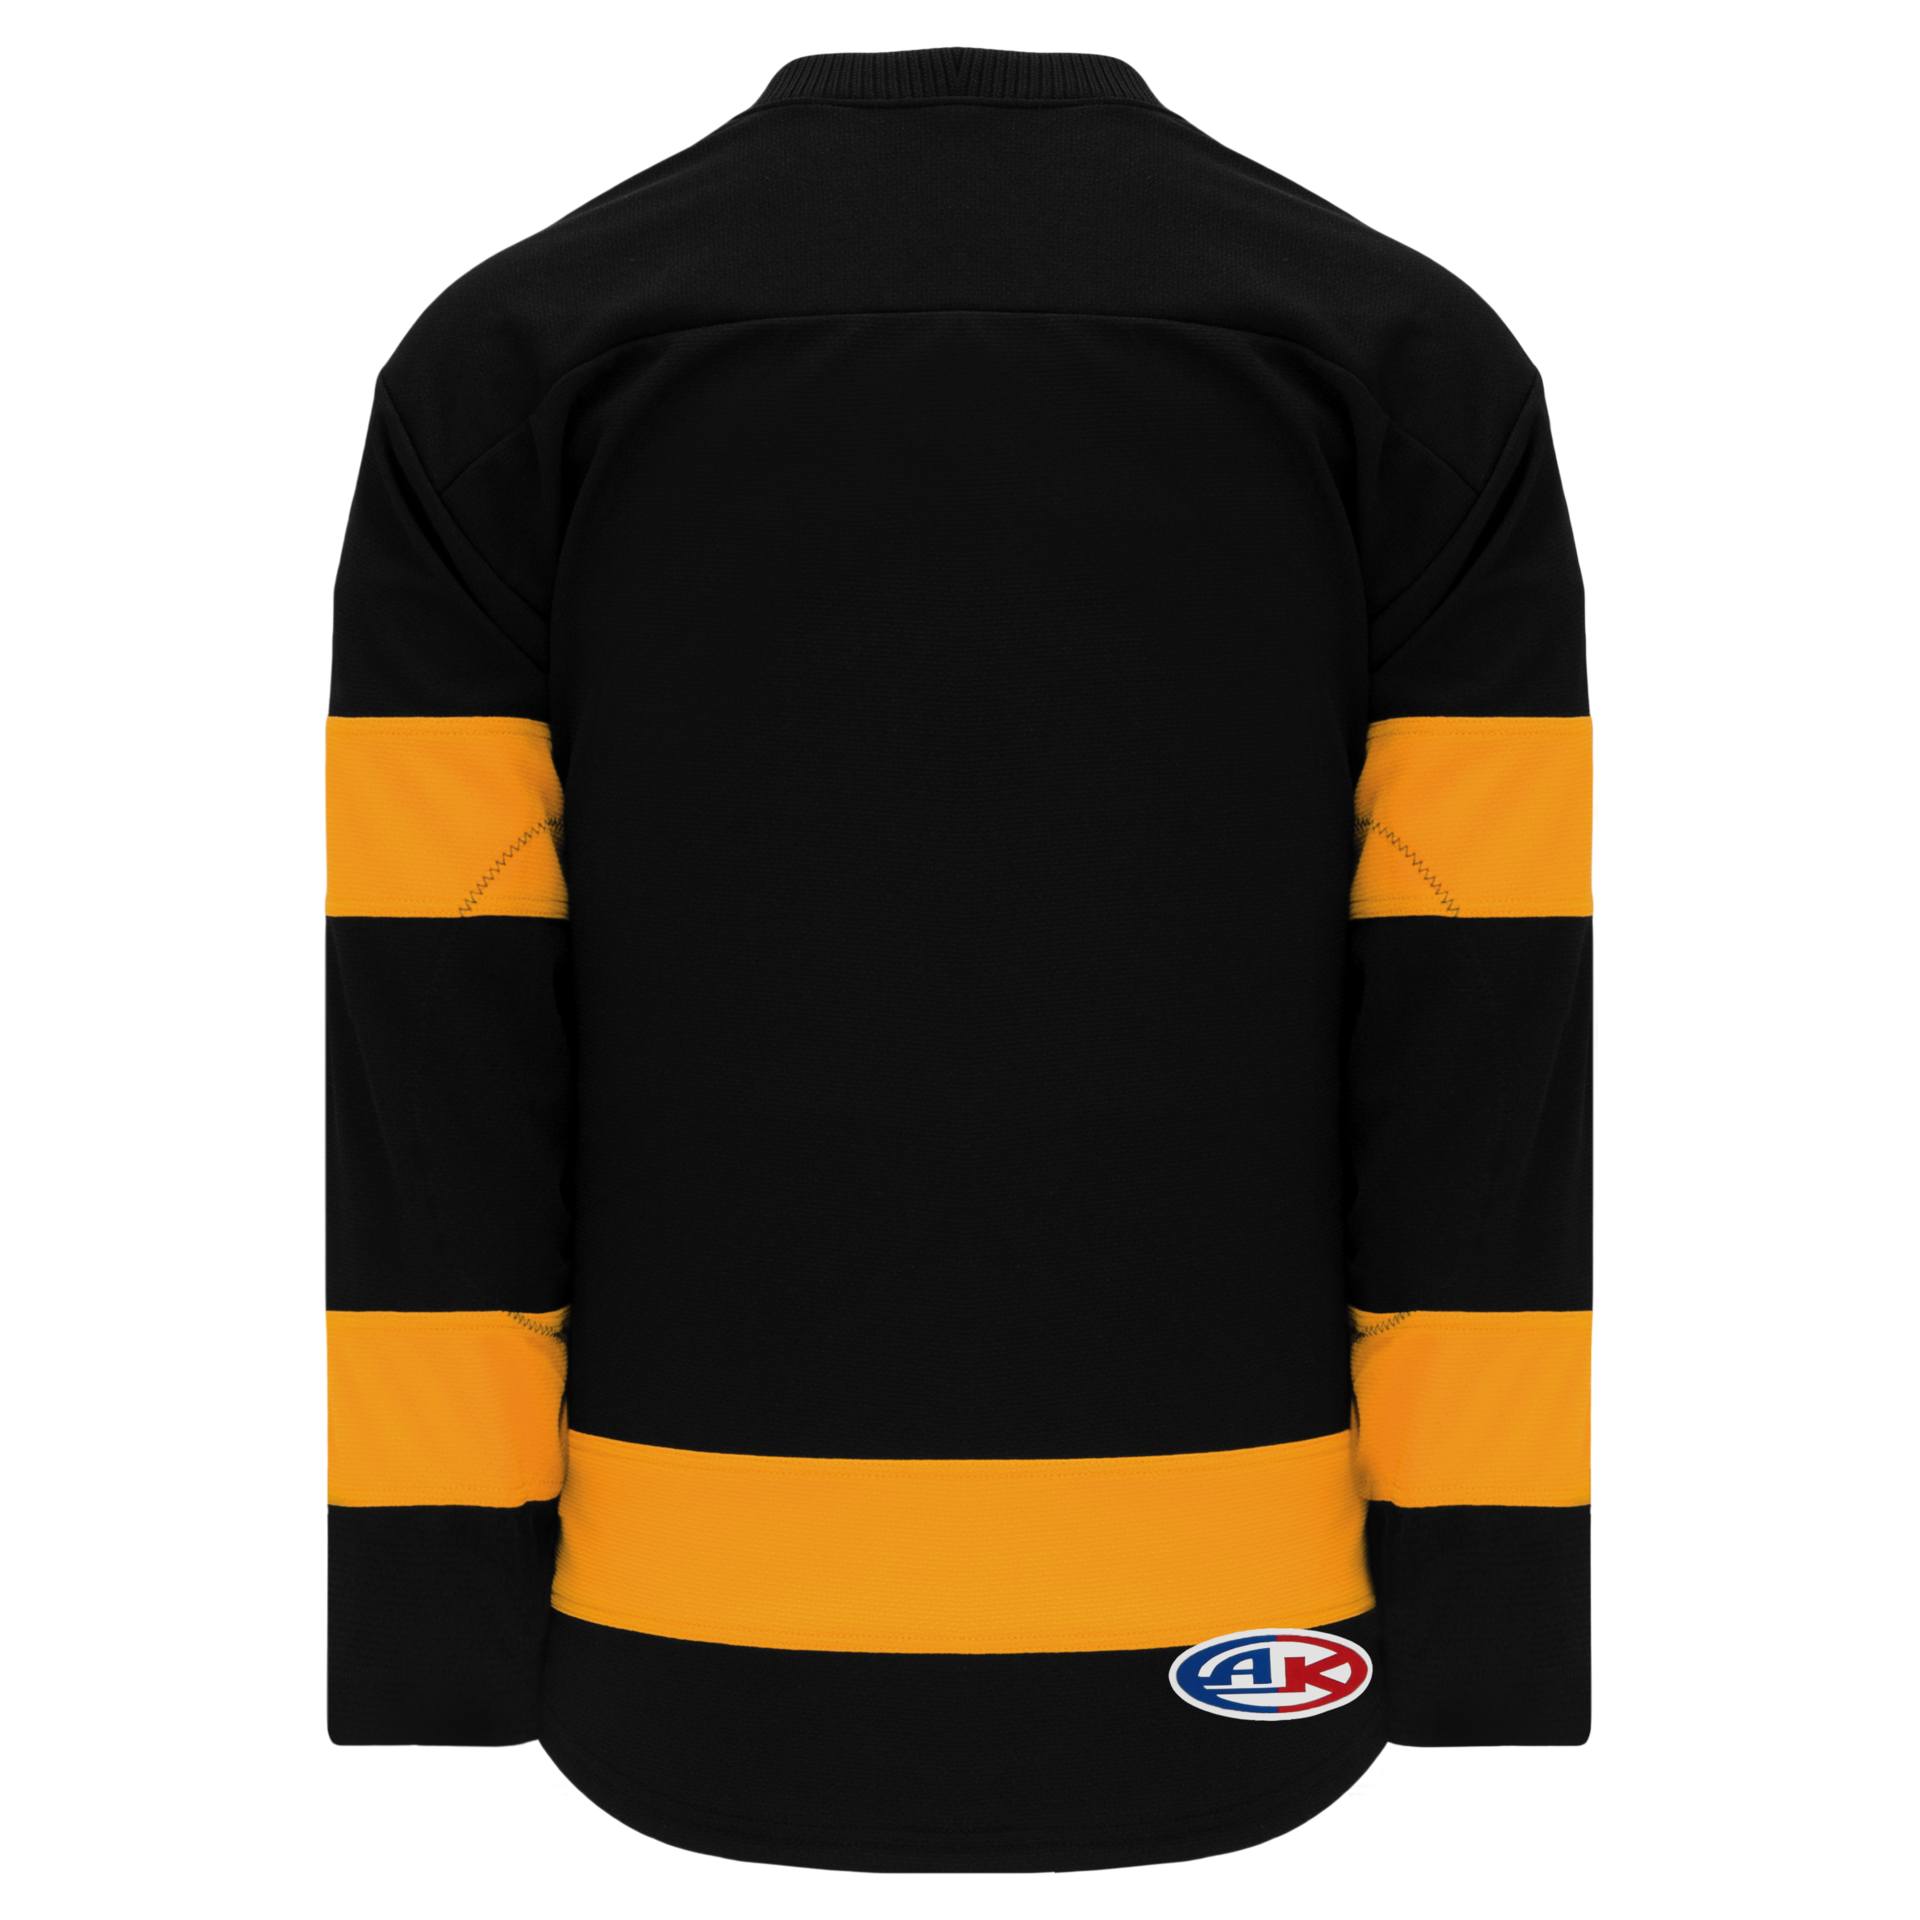 Custom Men's Detroit Tigers Alternate Jersey - Black Golden Replica